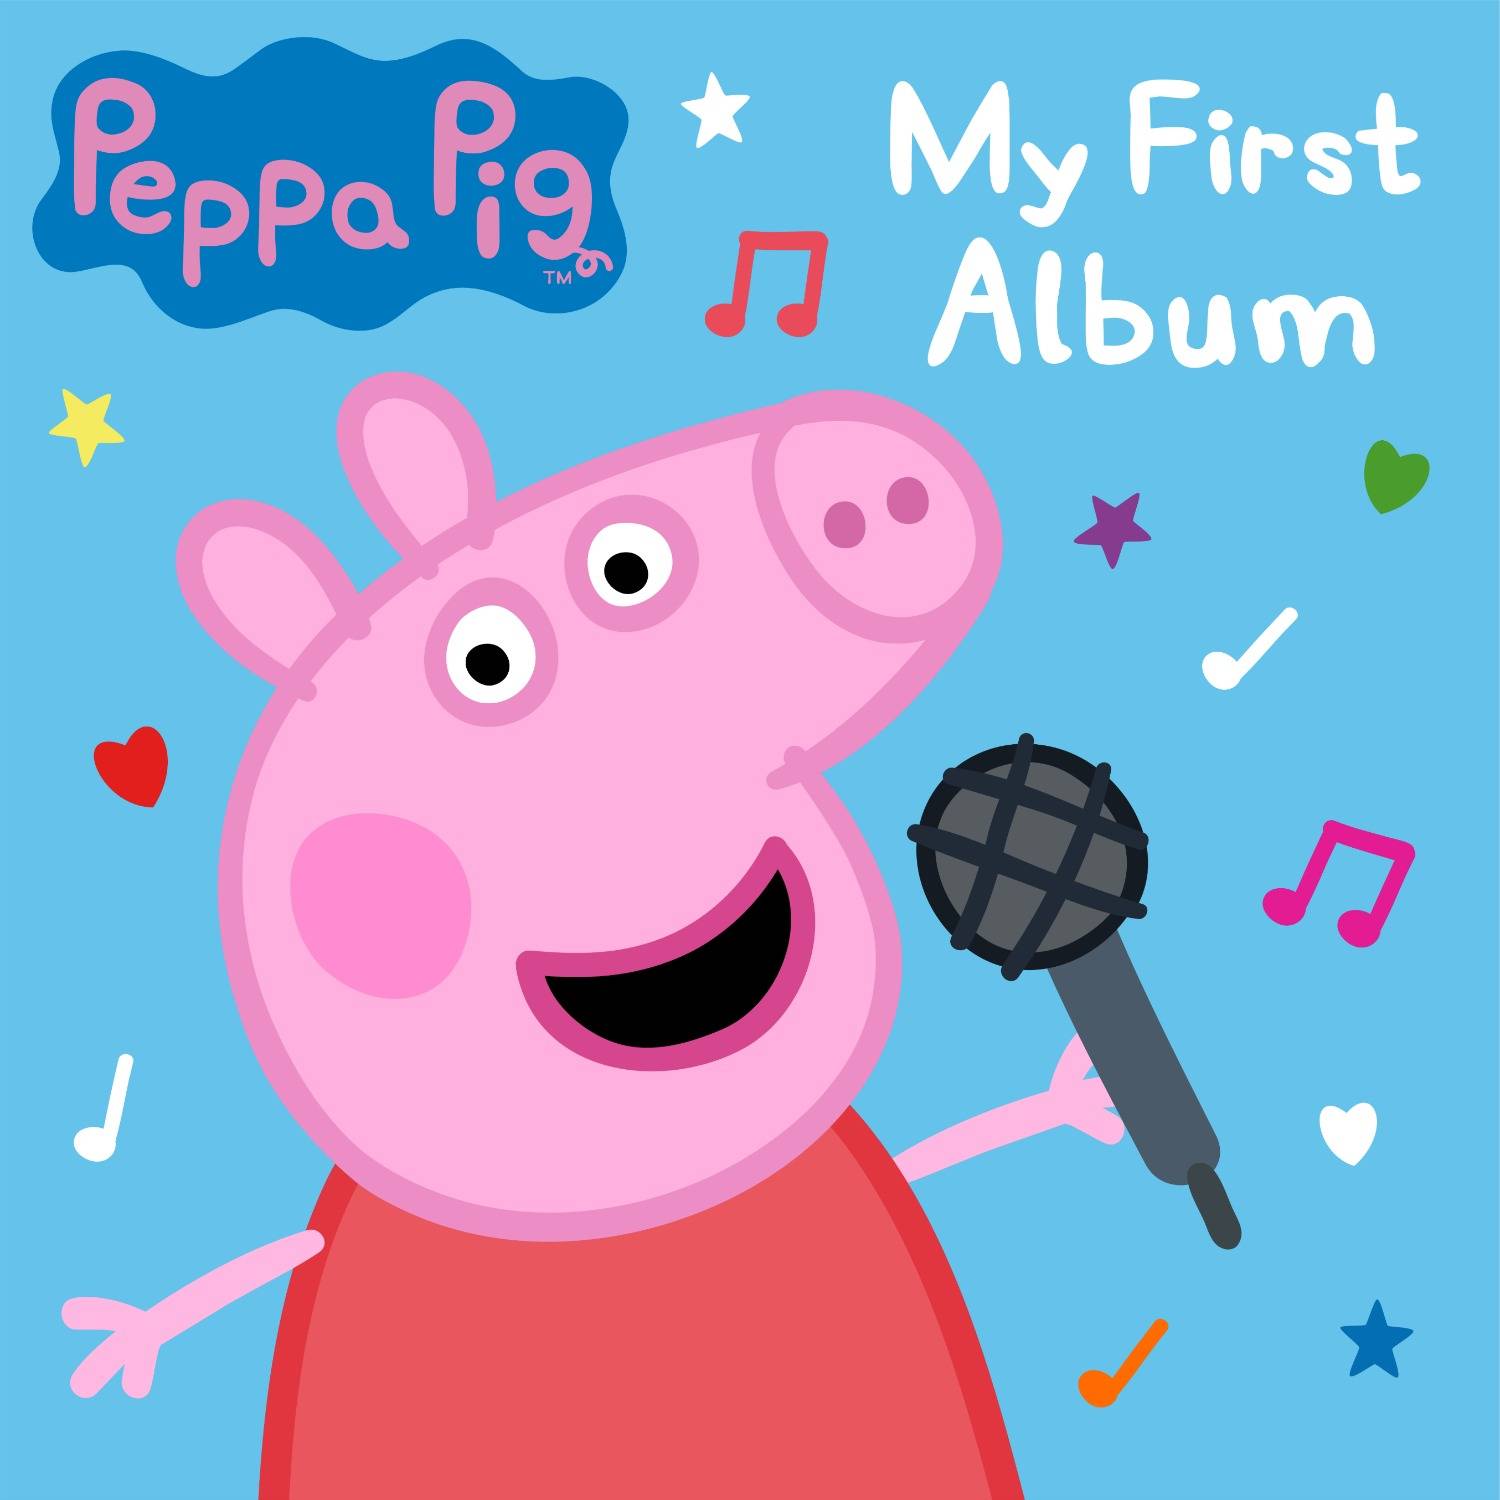 Peppa Pig Album Cover